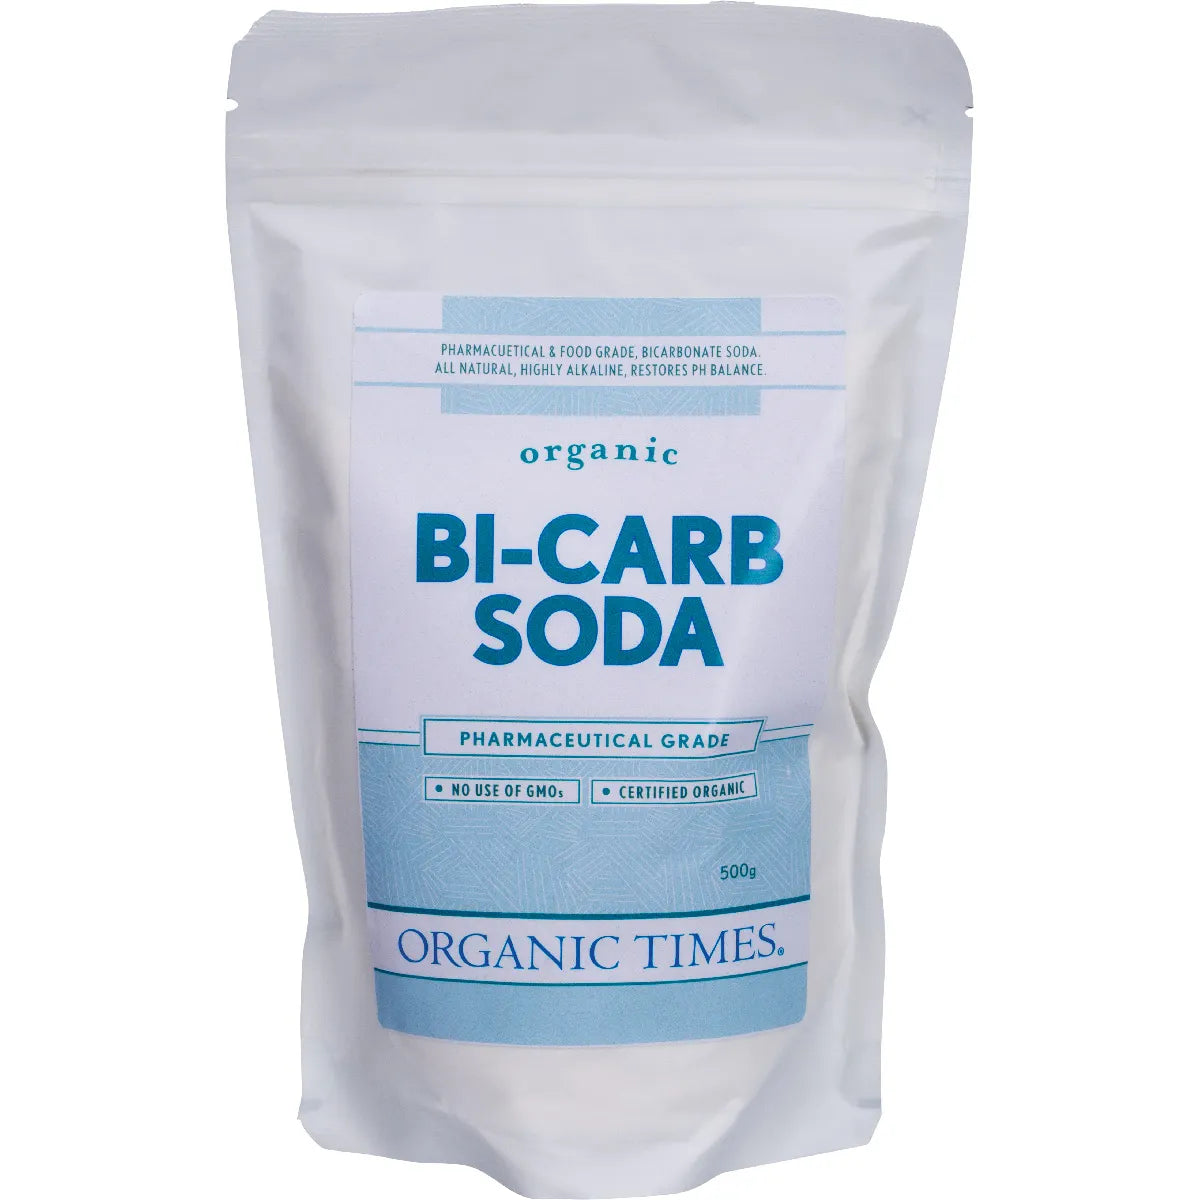 Organic Times Bi-Carb Soda Organic Pharmaceutical Grade 500g